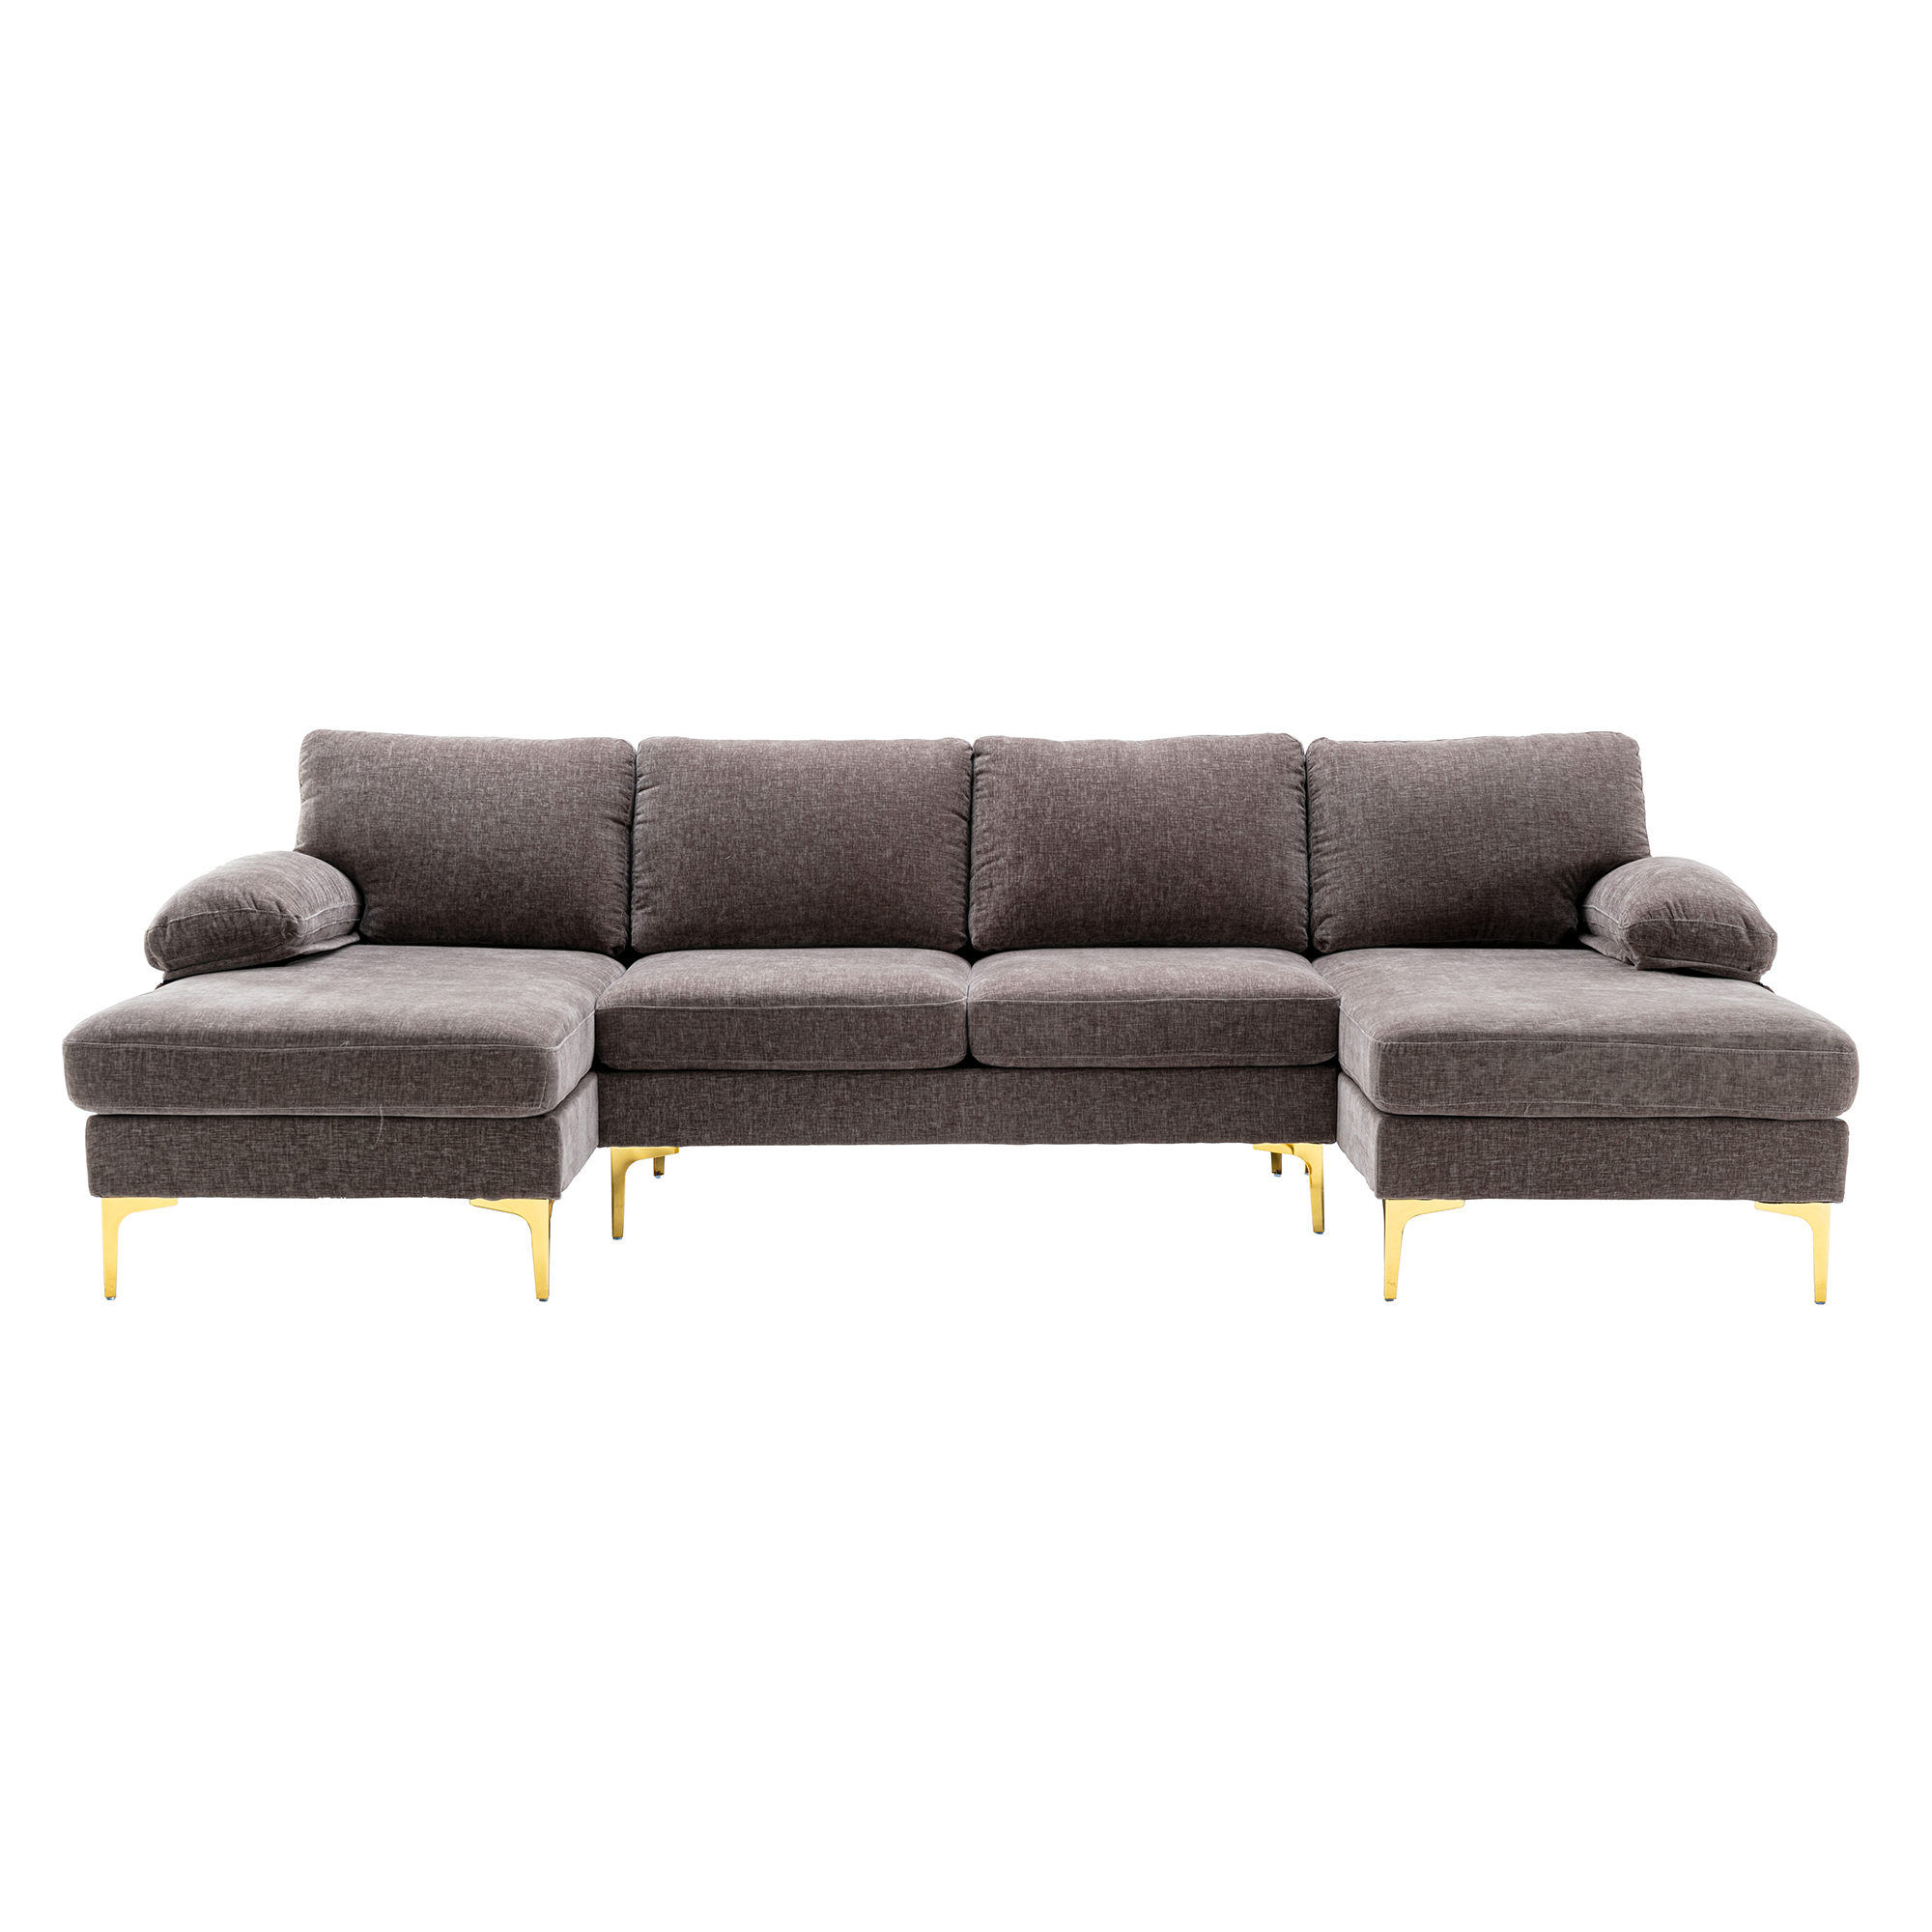 Accent sofa /Living room sofa sectional  sofa-Boyel Living